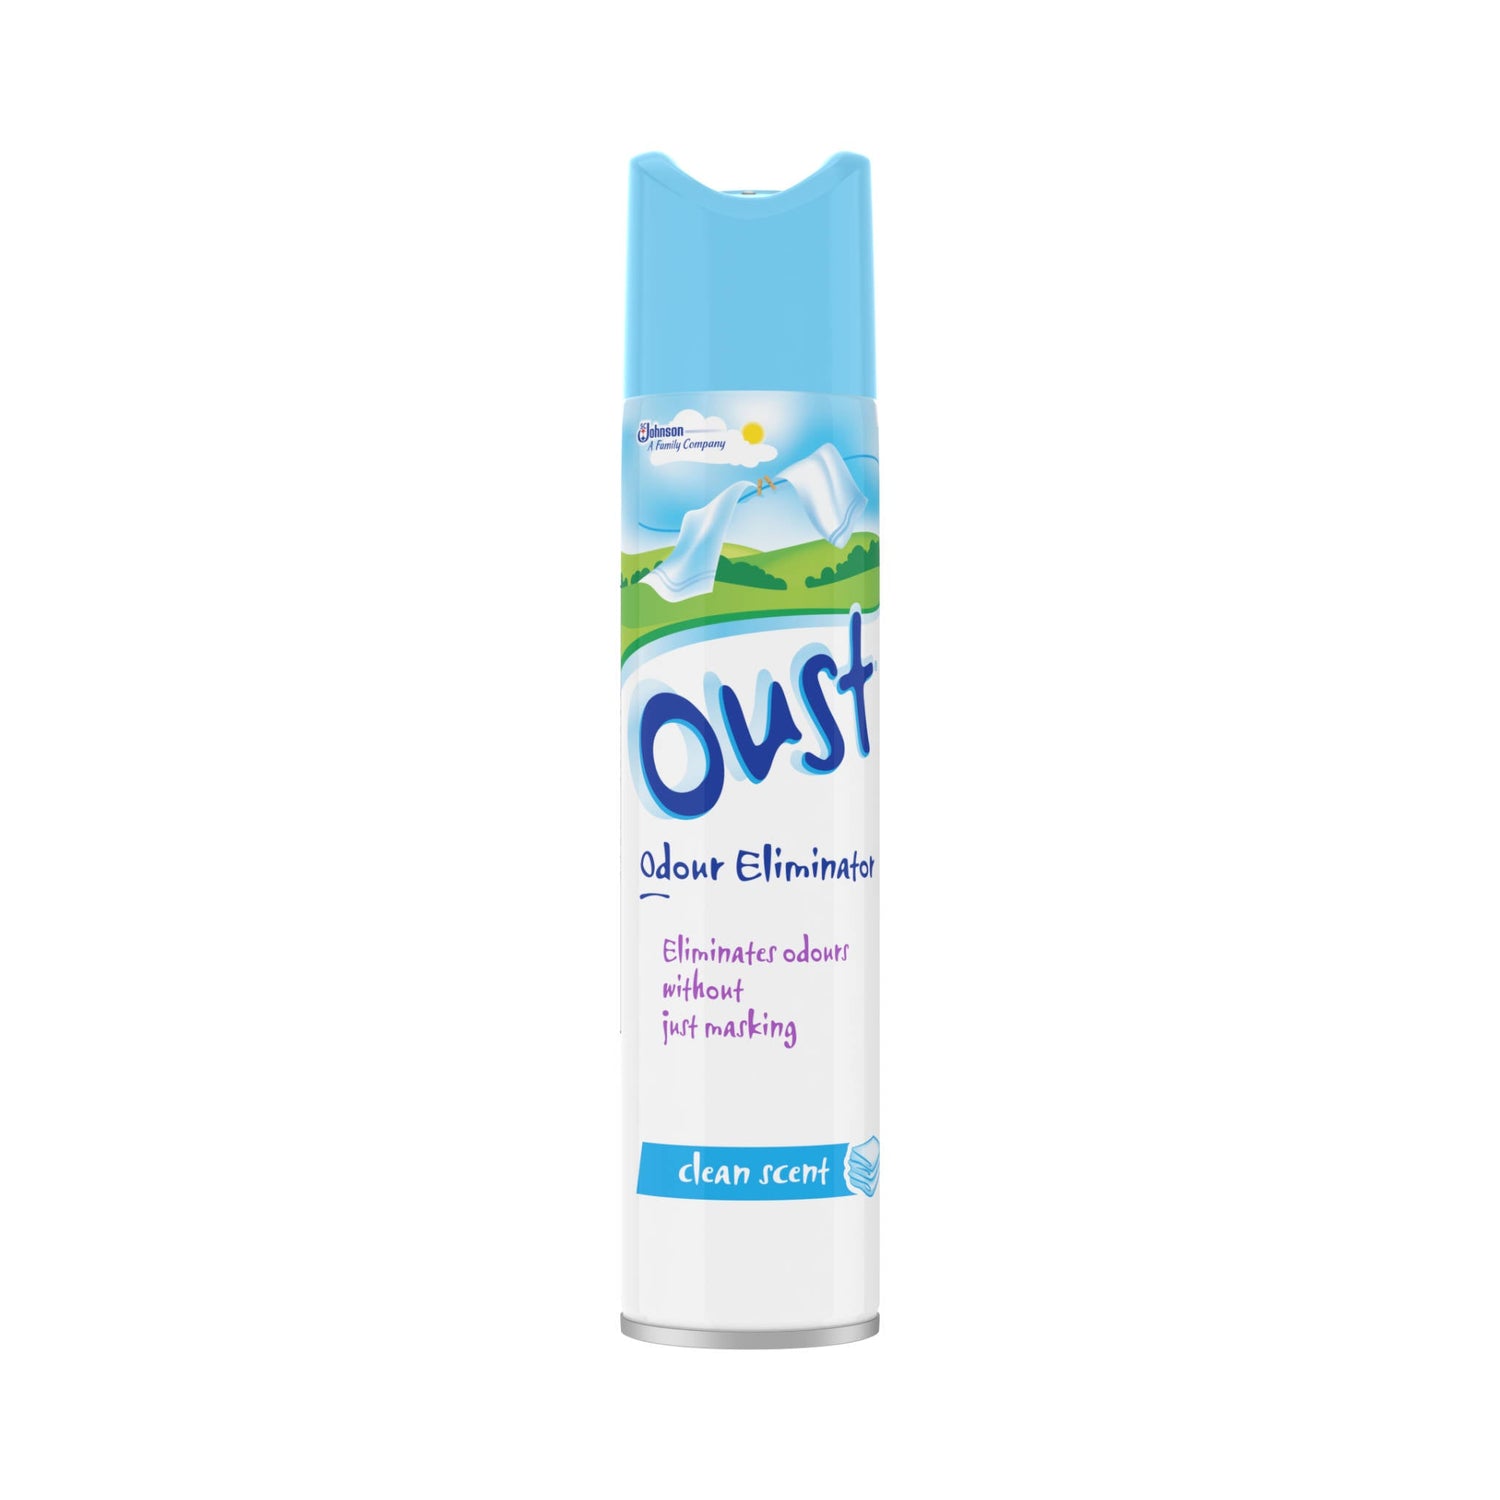 Oust Air Freshener Odour Eliminator Clean Scent | 300ml